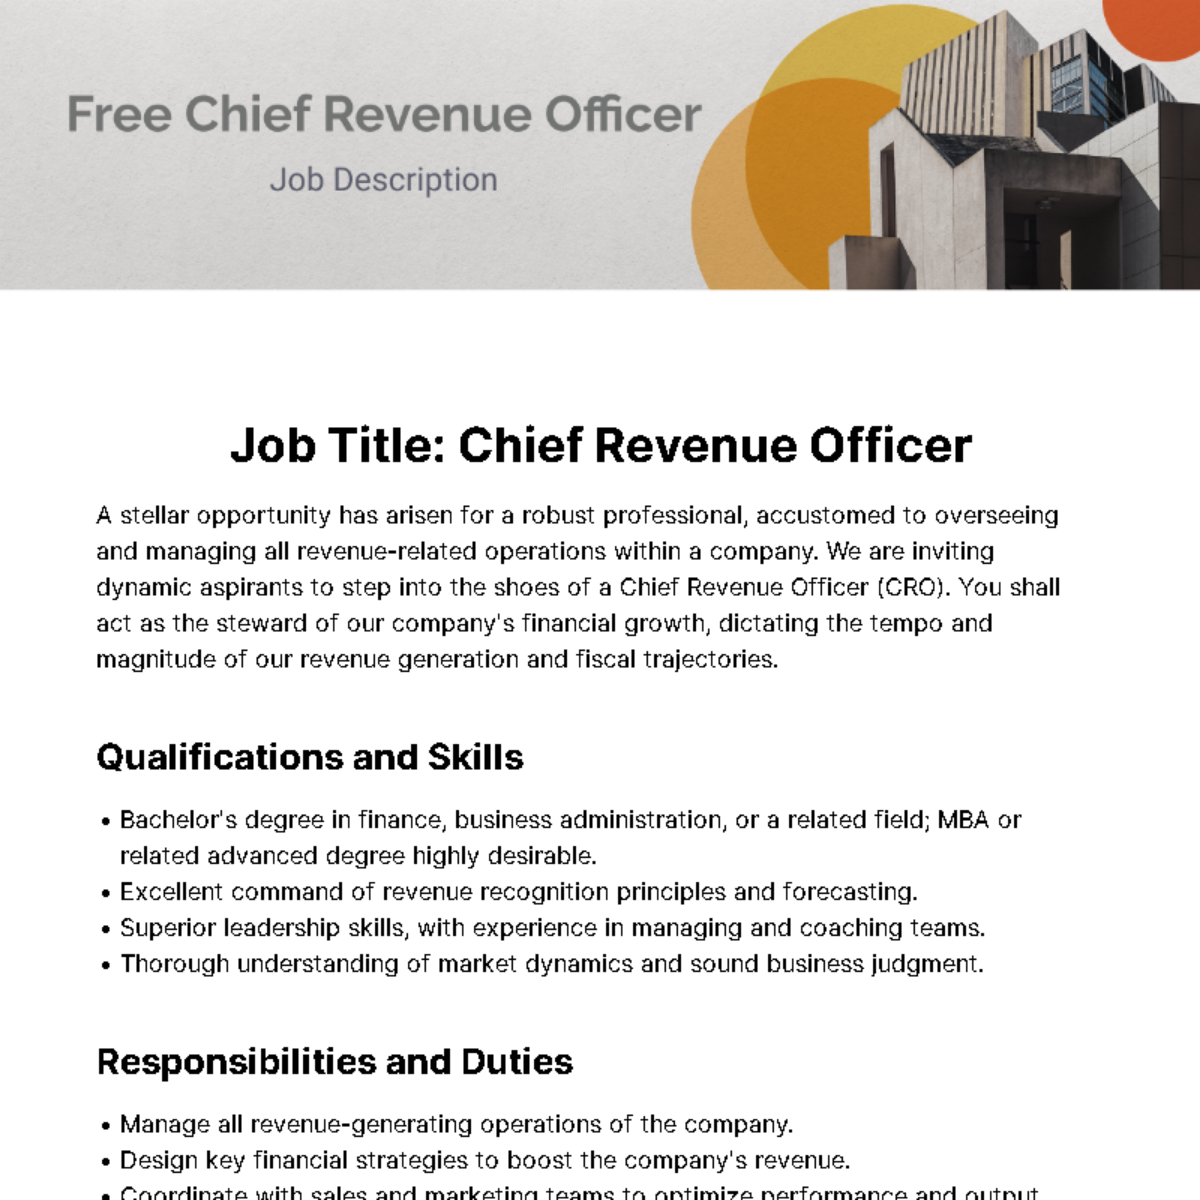 Chief Revenue Officer Job Description Template